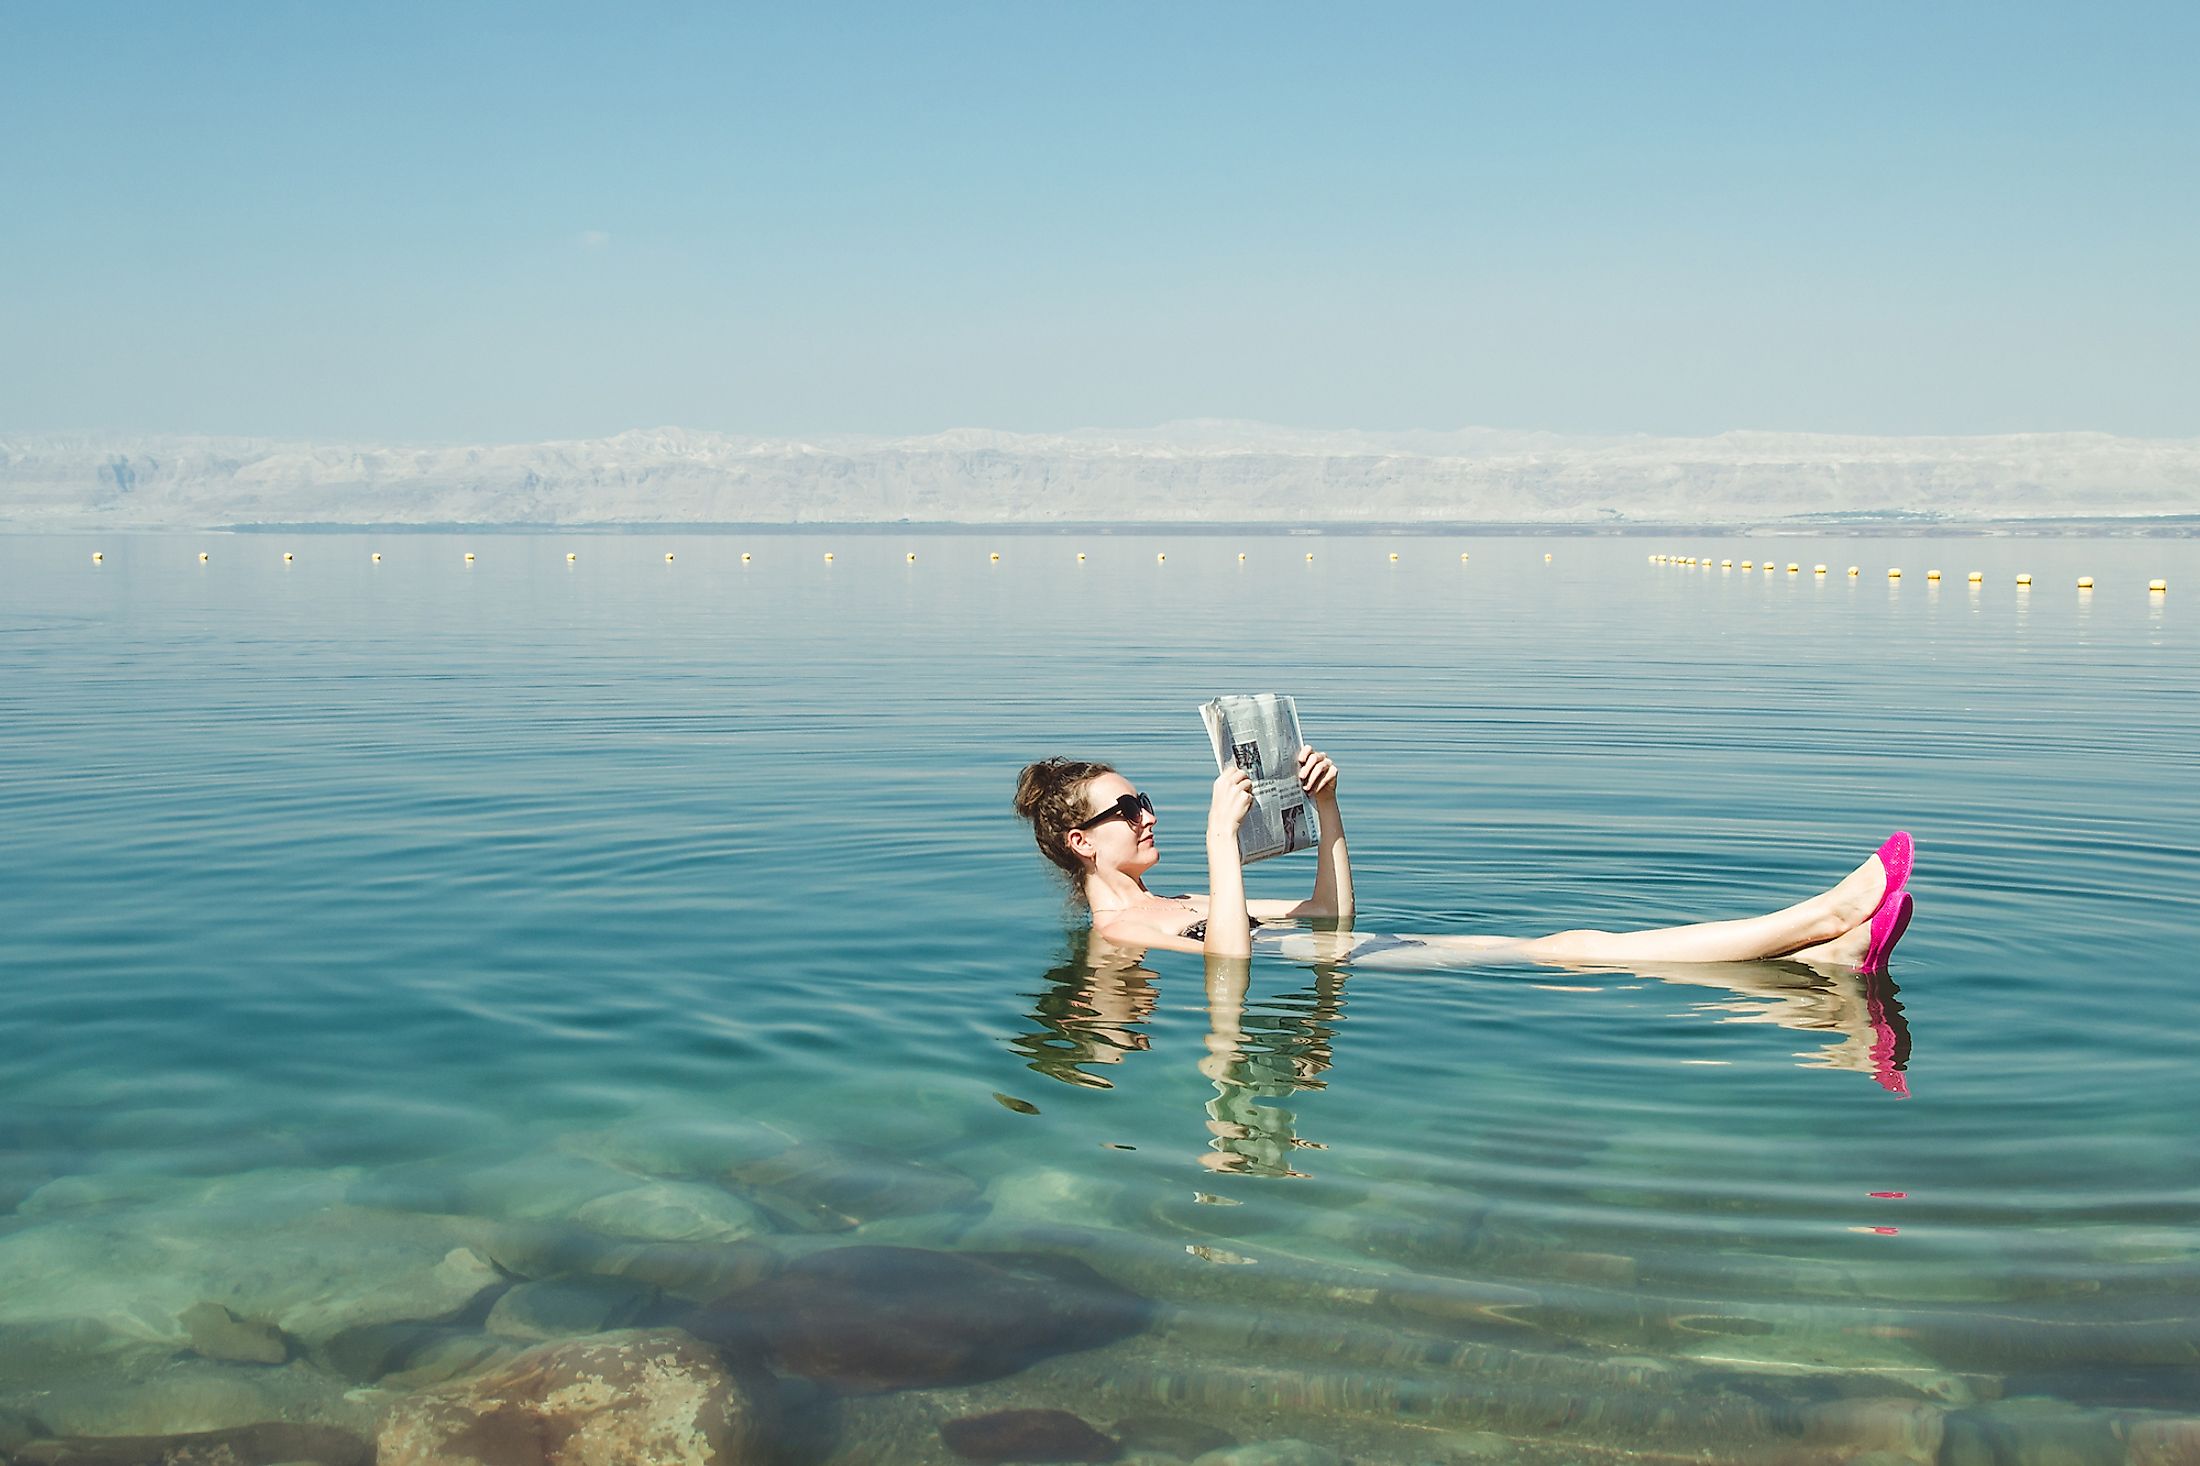 Earth Day 2022 - Report on the Dead Sea's Status